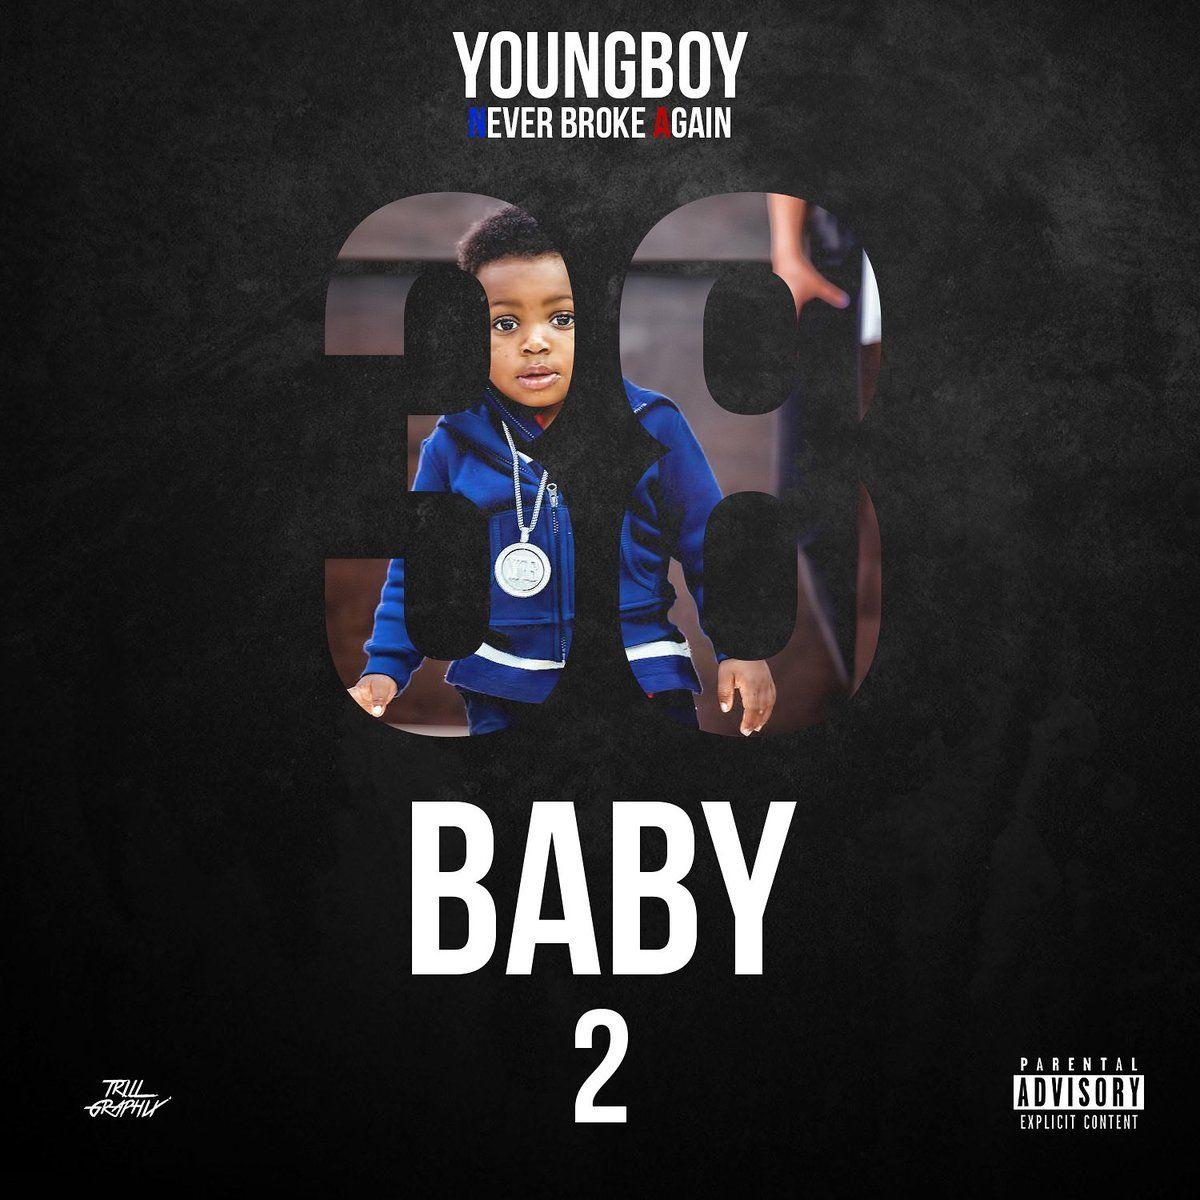 Free download NBA Young Boy 38 Baby Wallpaper Top NBA Young